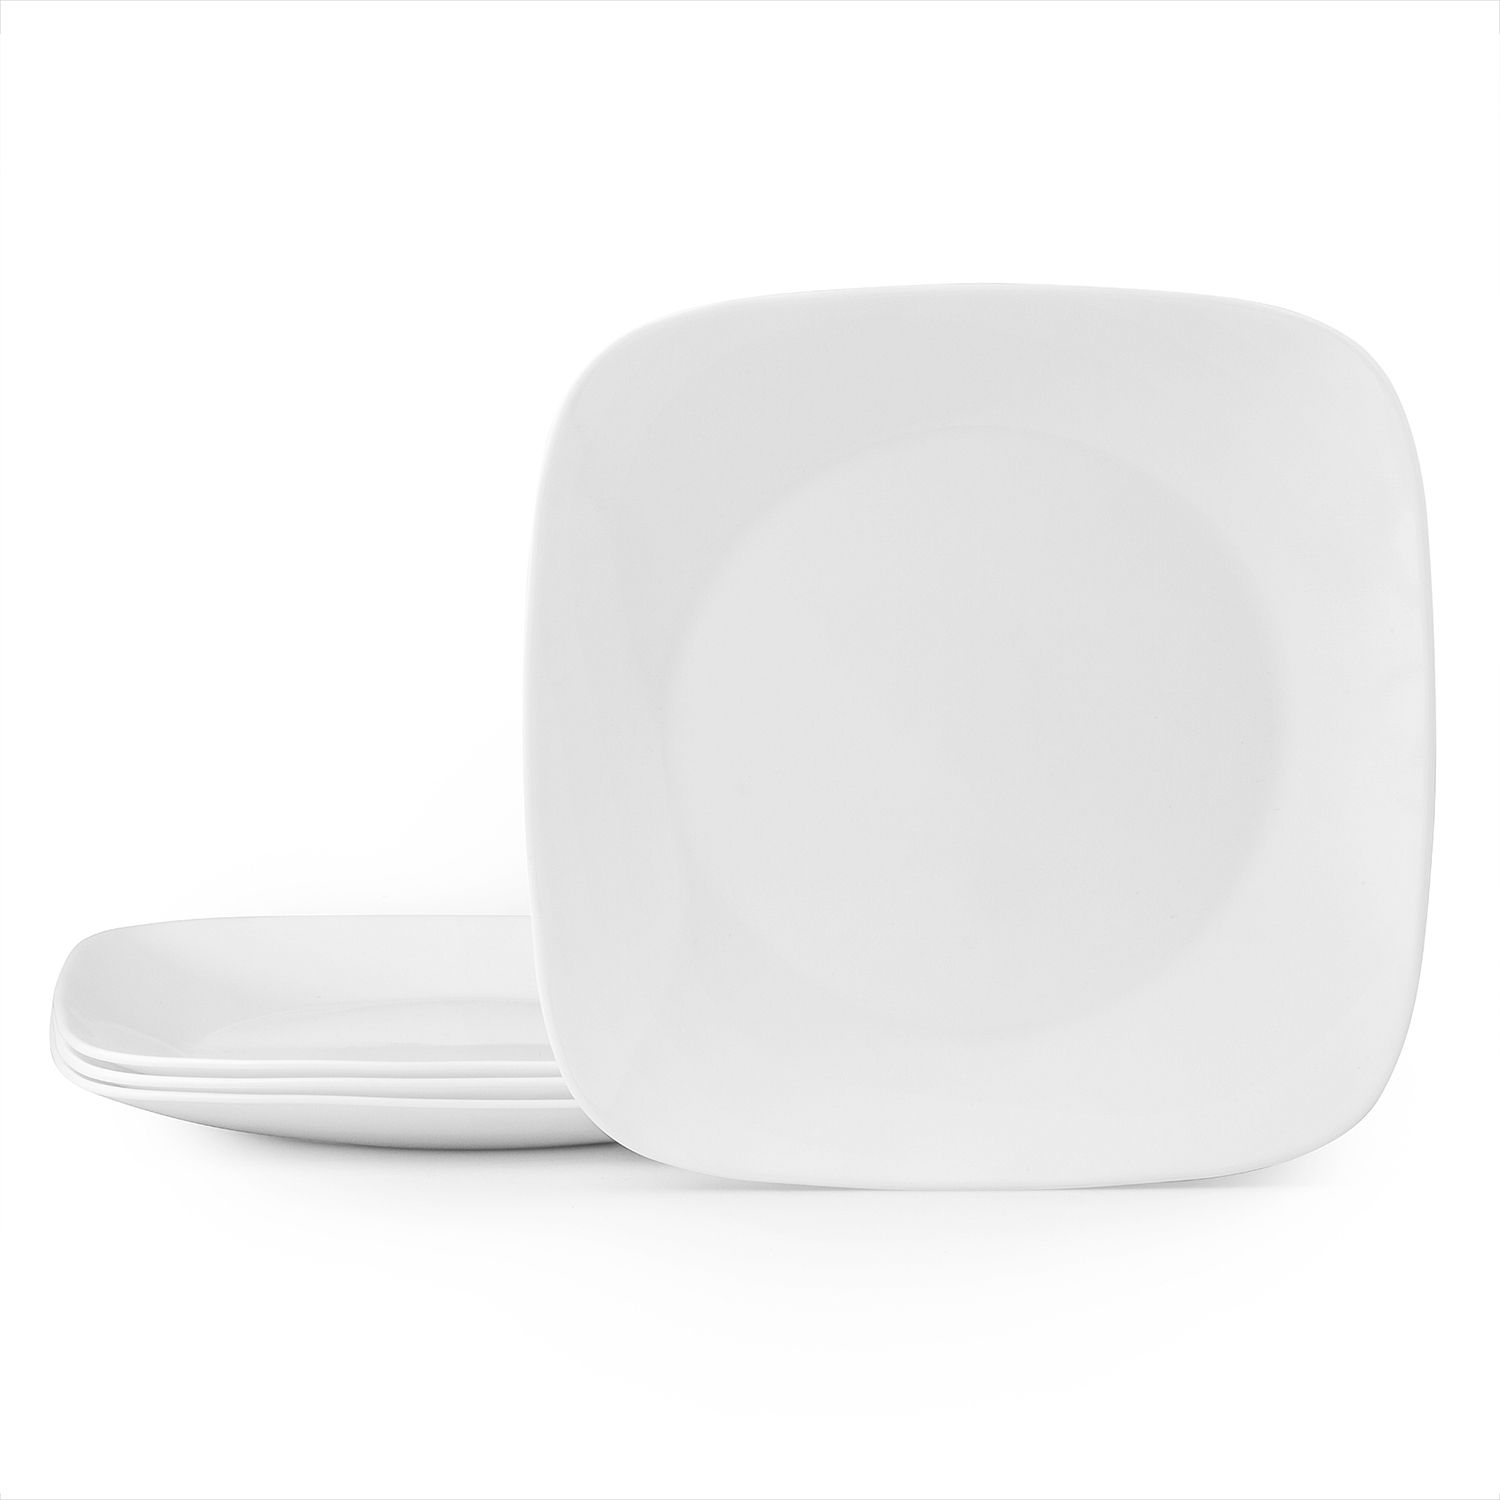 white plate set